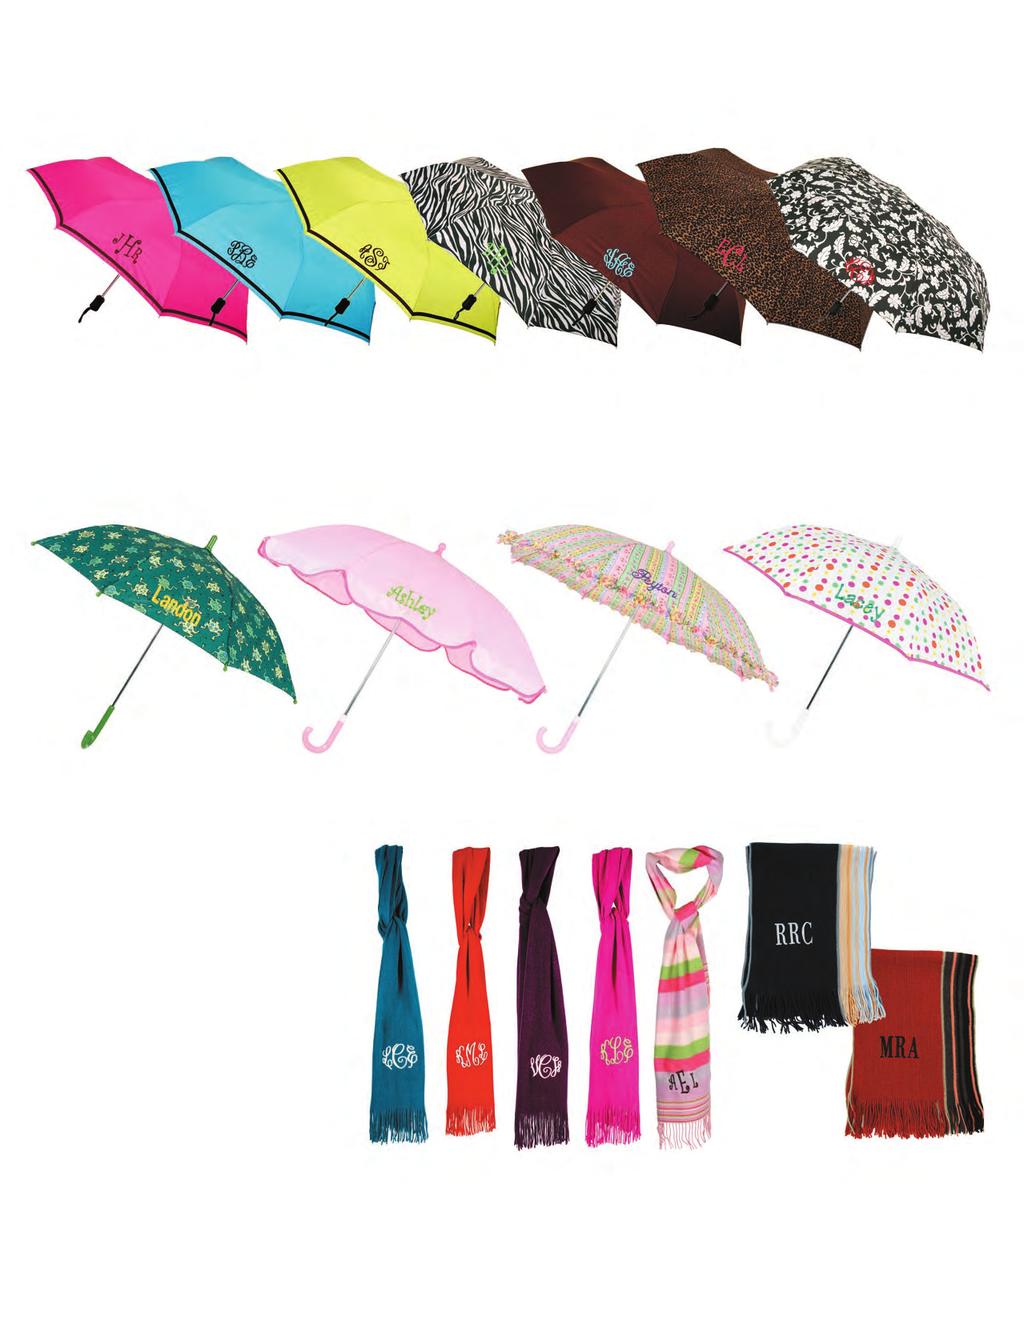 Umbrella Programs Adorable compact umbrellas are hugely popular items. Features auto open/close functionality.